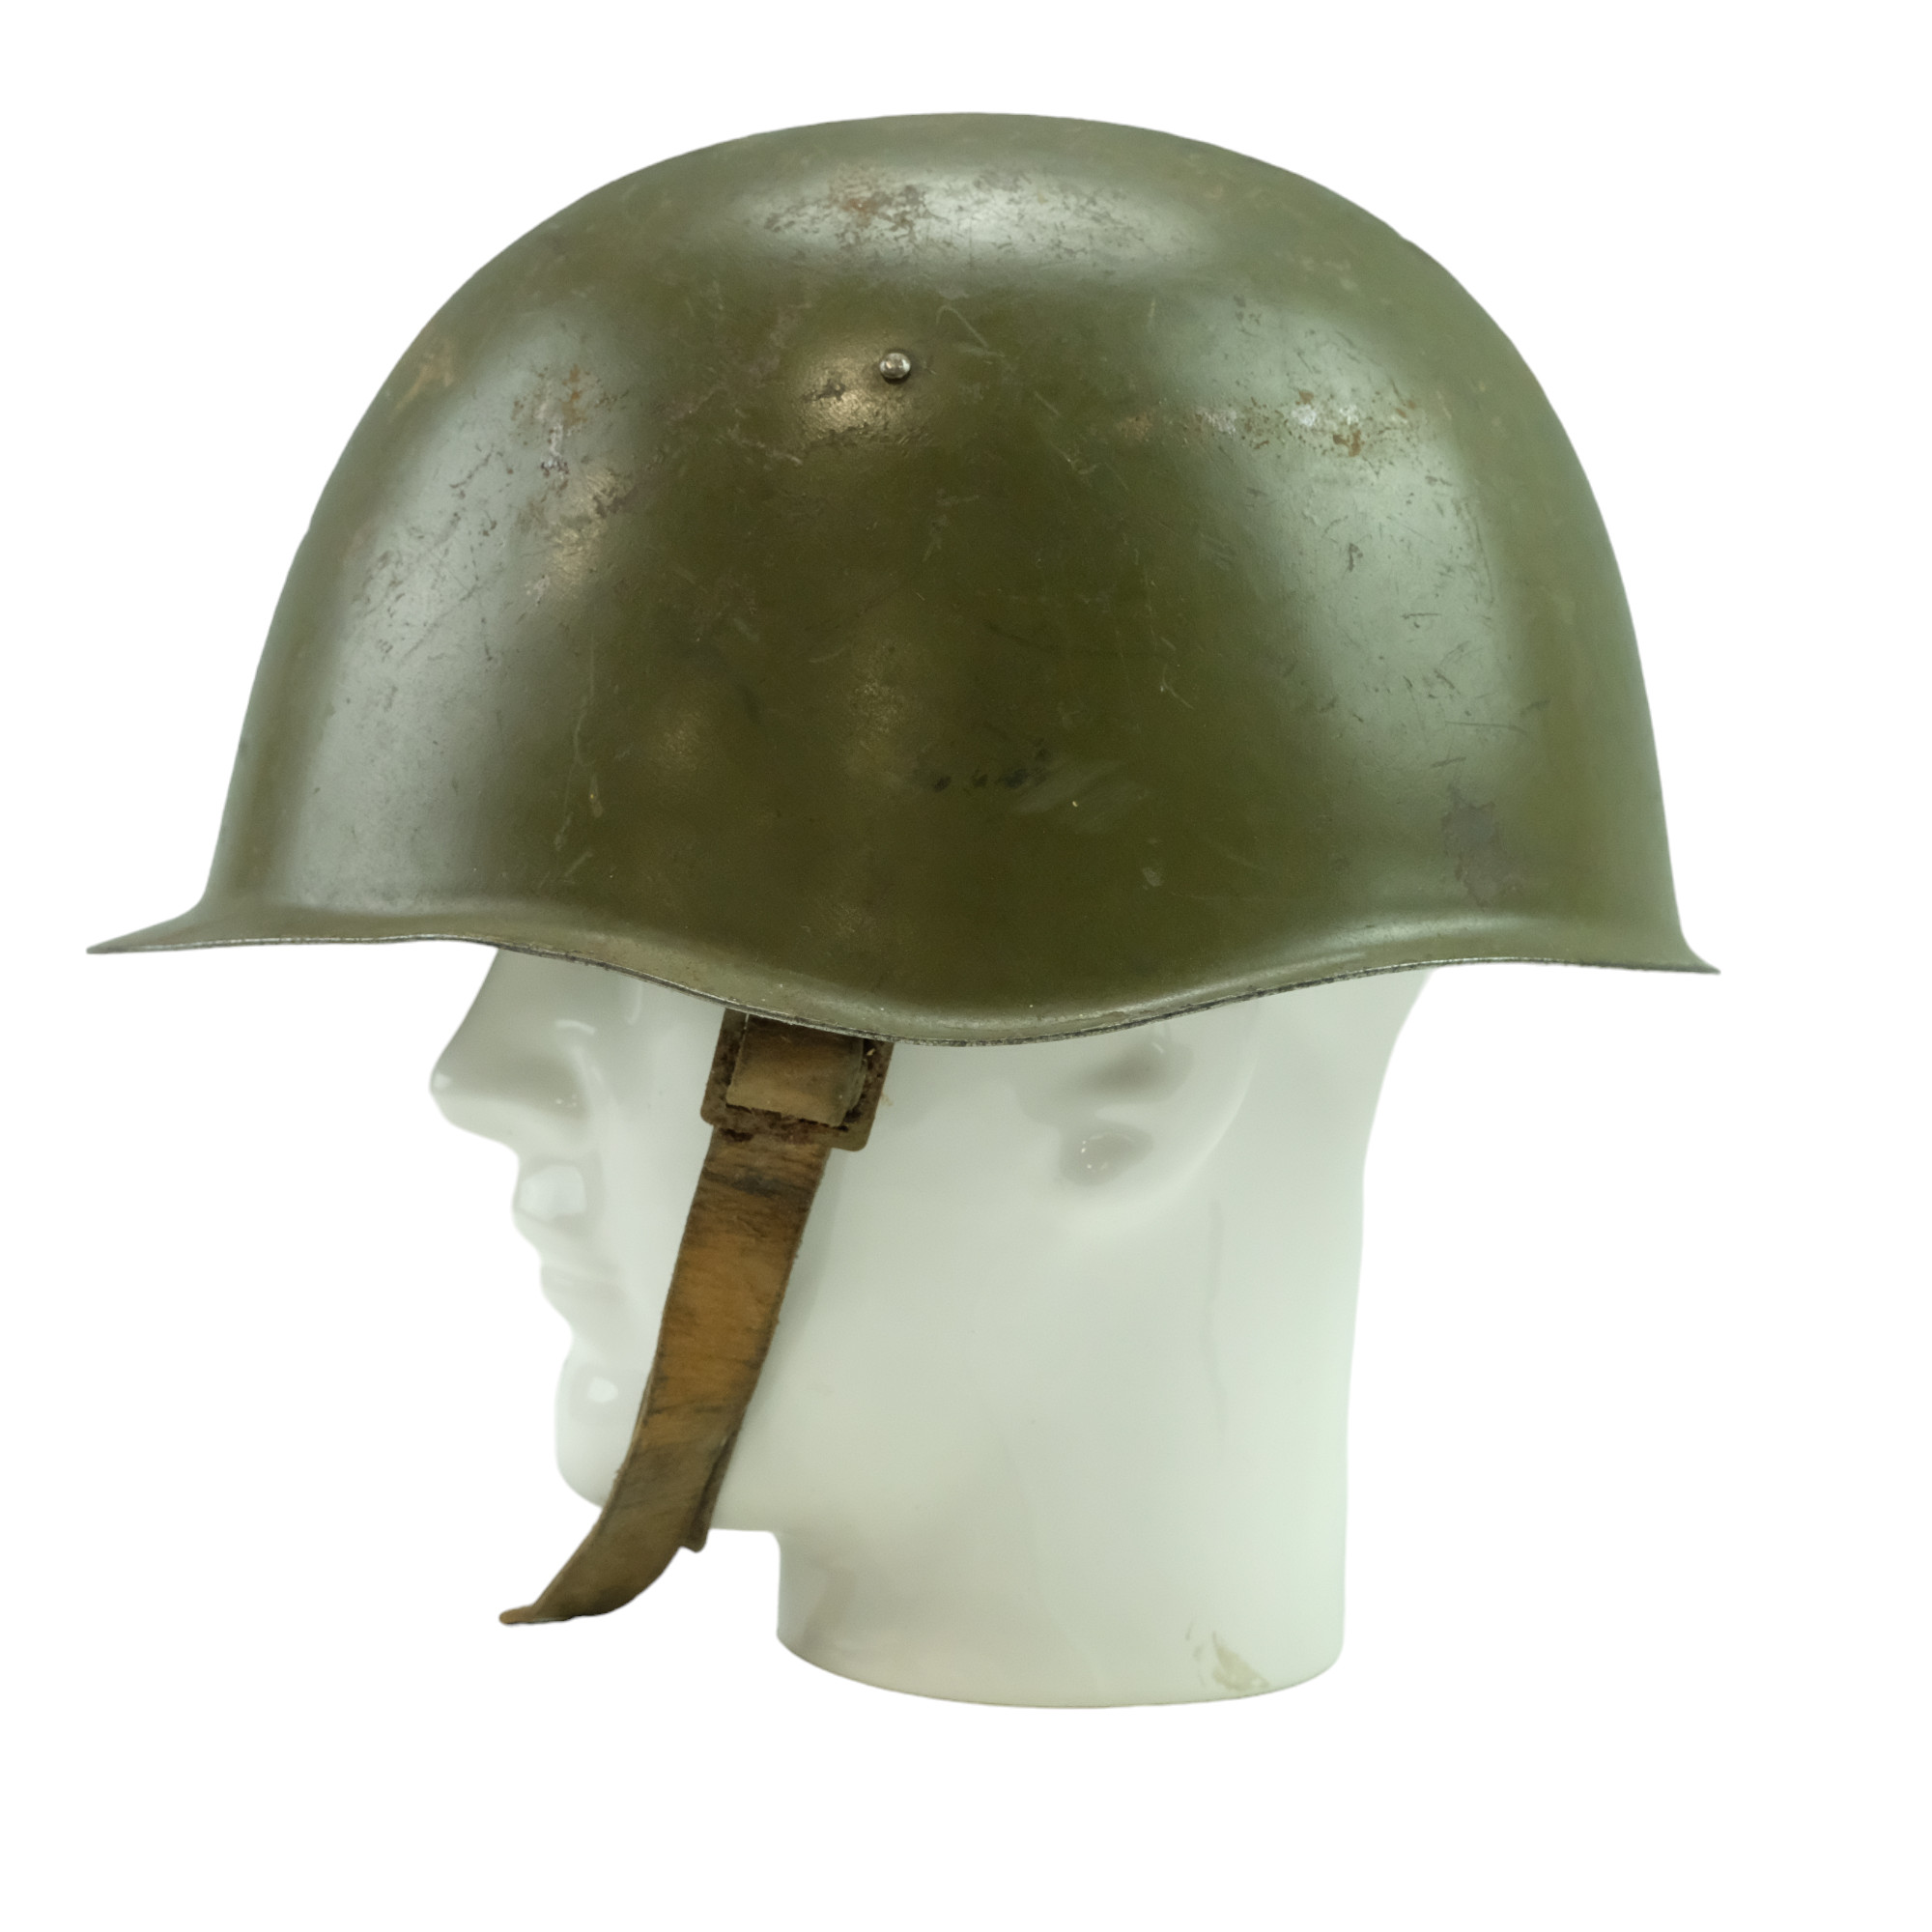 A Bulgarian Ssh40 helmet - Image 2 of 5